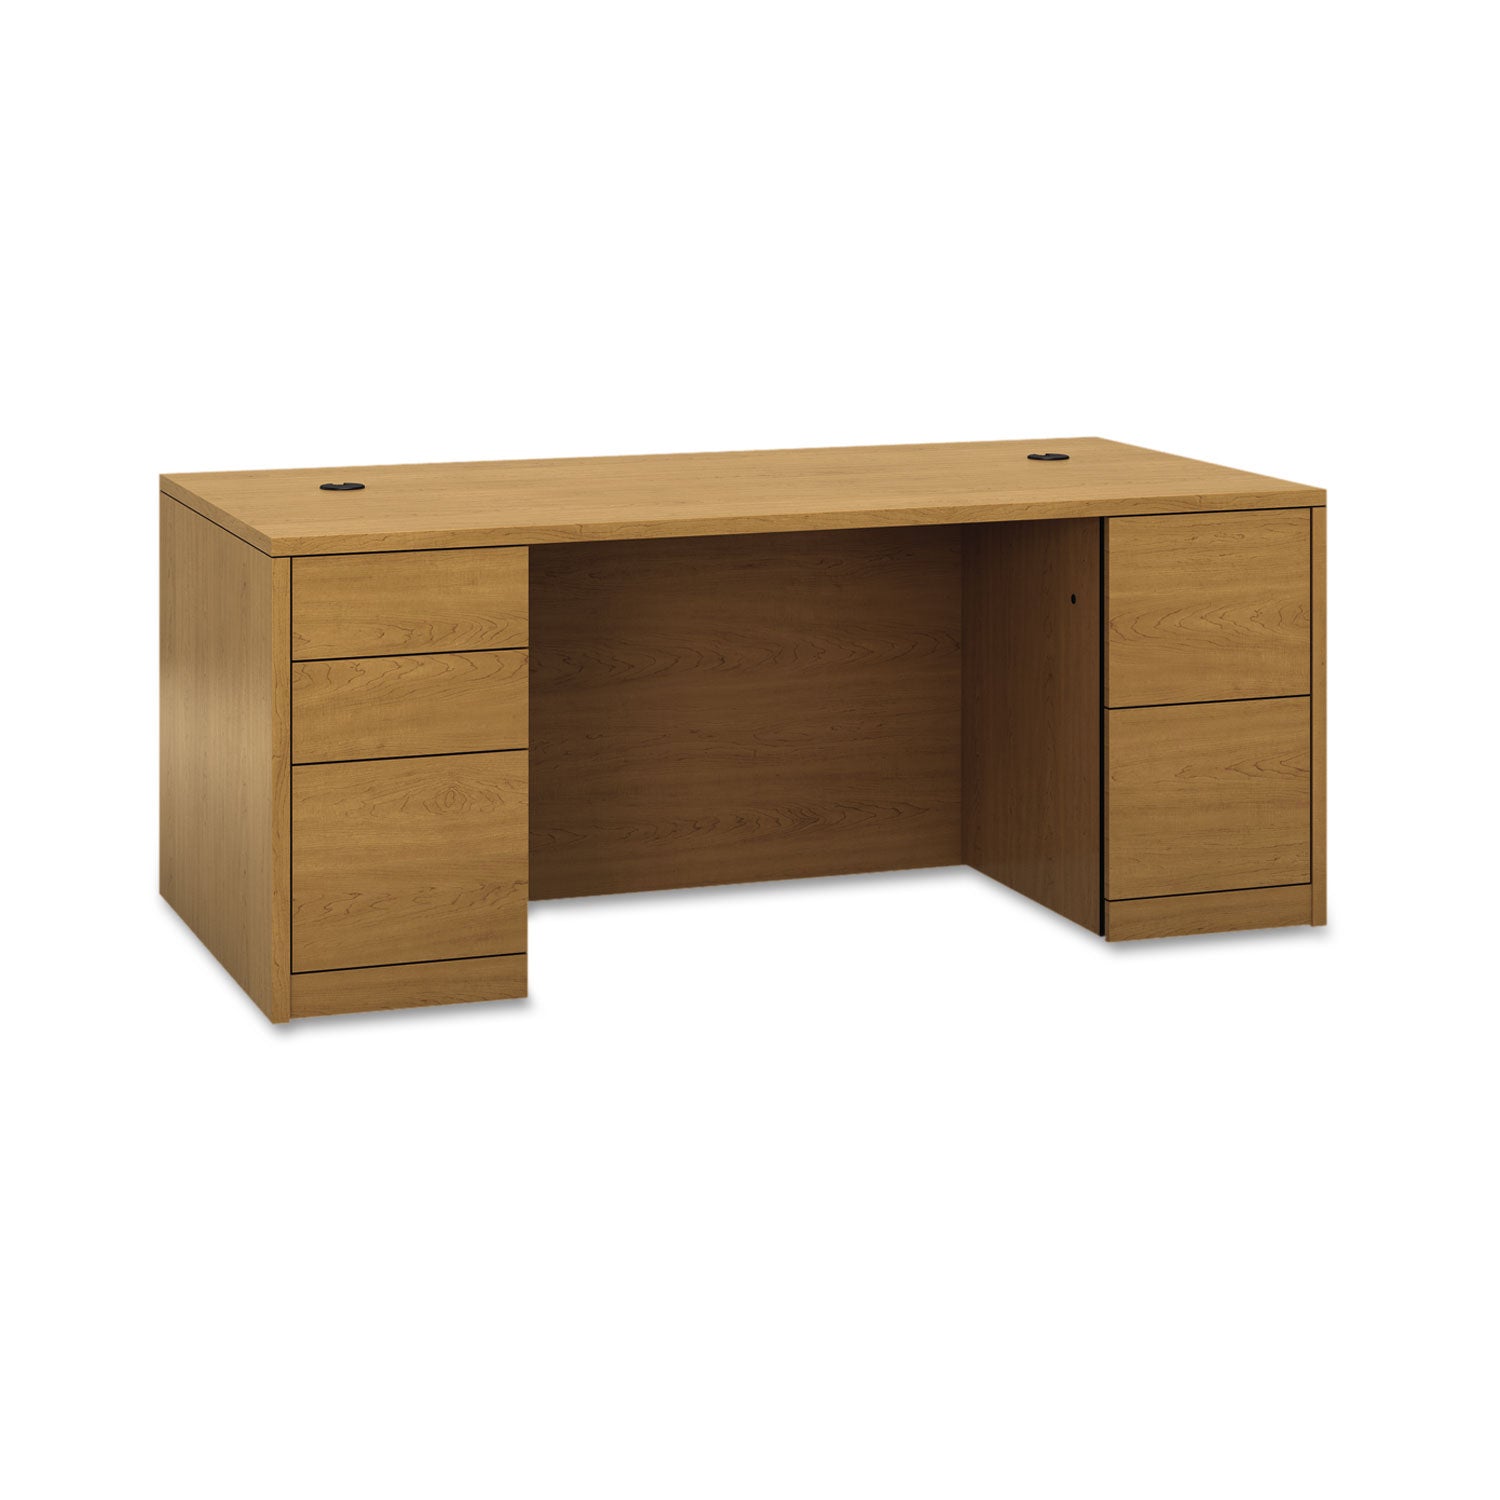 10500 Series Double Pedestal Desk with Full Pedestals, 72" x 36" x 29.5", Harvest - 